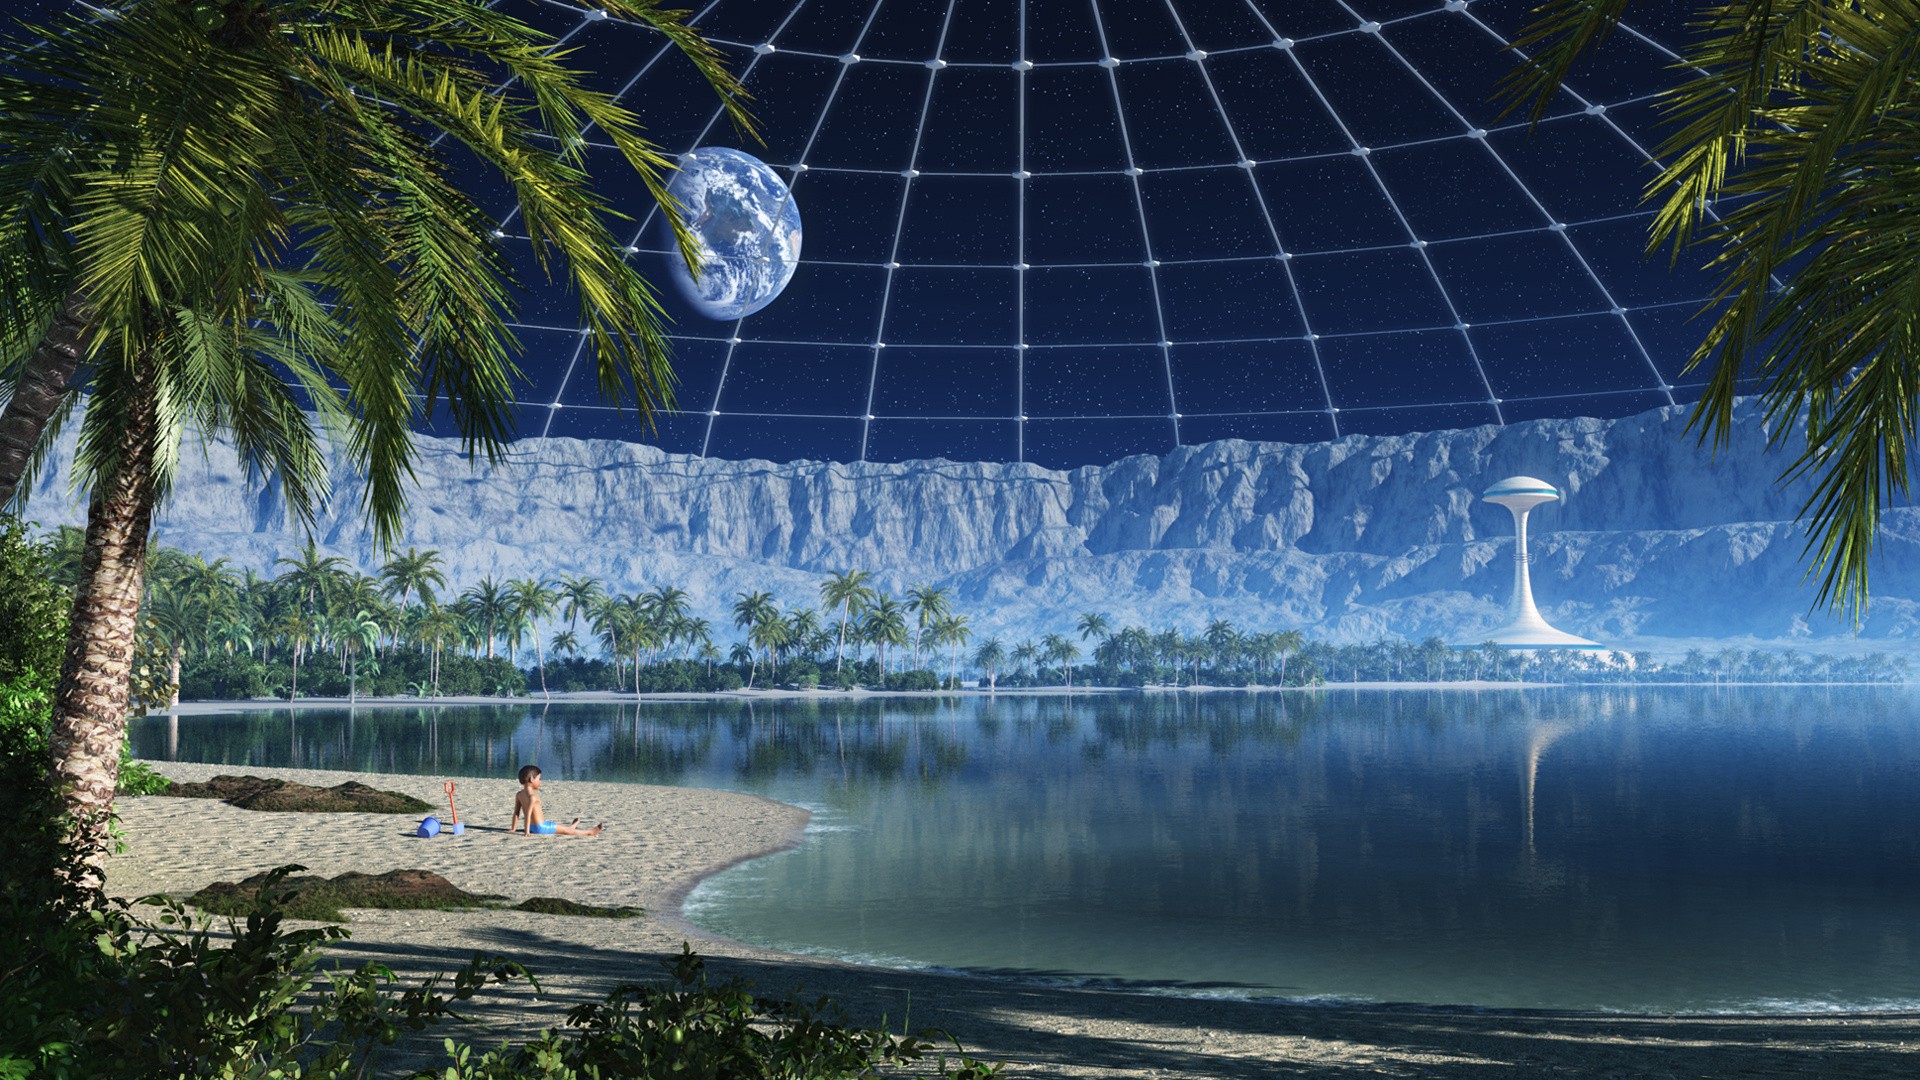 Digital Art Fantasy Art Futuristic Children Sand Water Palm Trees Mountains Earth Globes Sphere Star 1920x1080